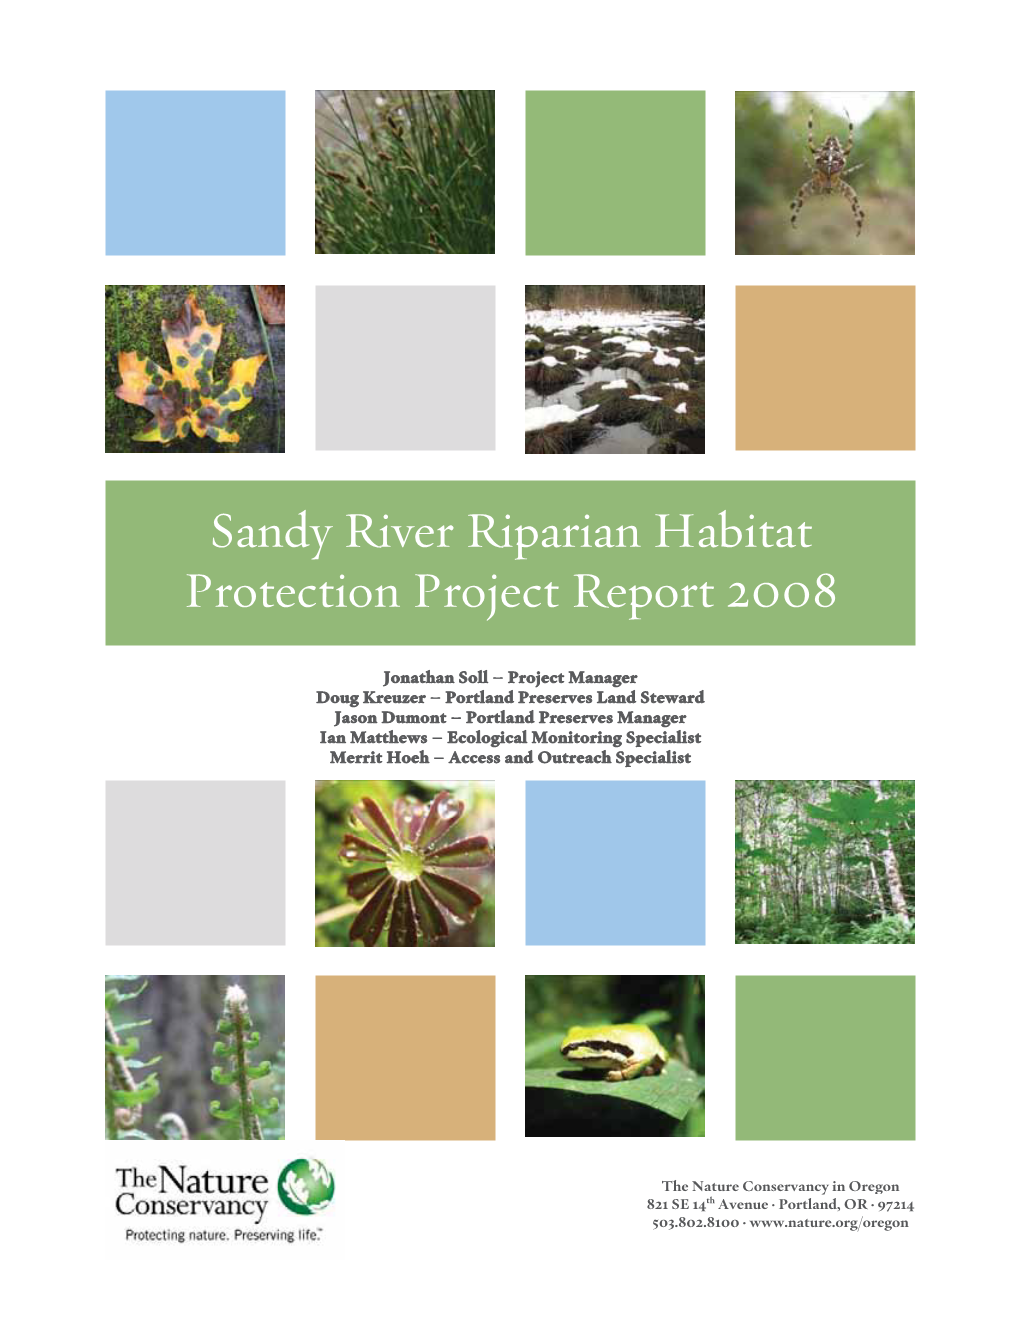 Sandy River Riparian Habitat Protection Project Report 2008